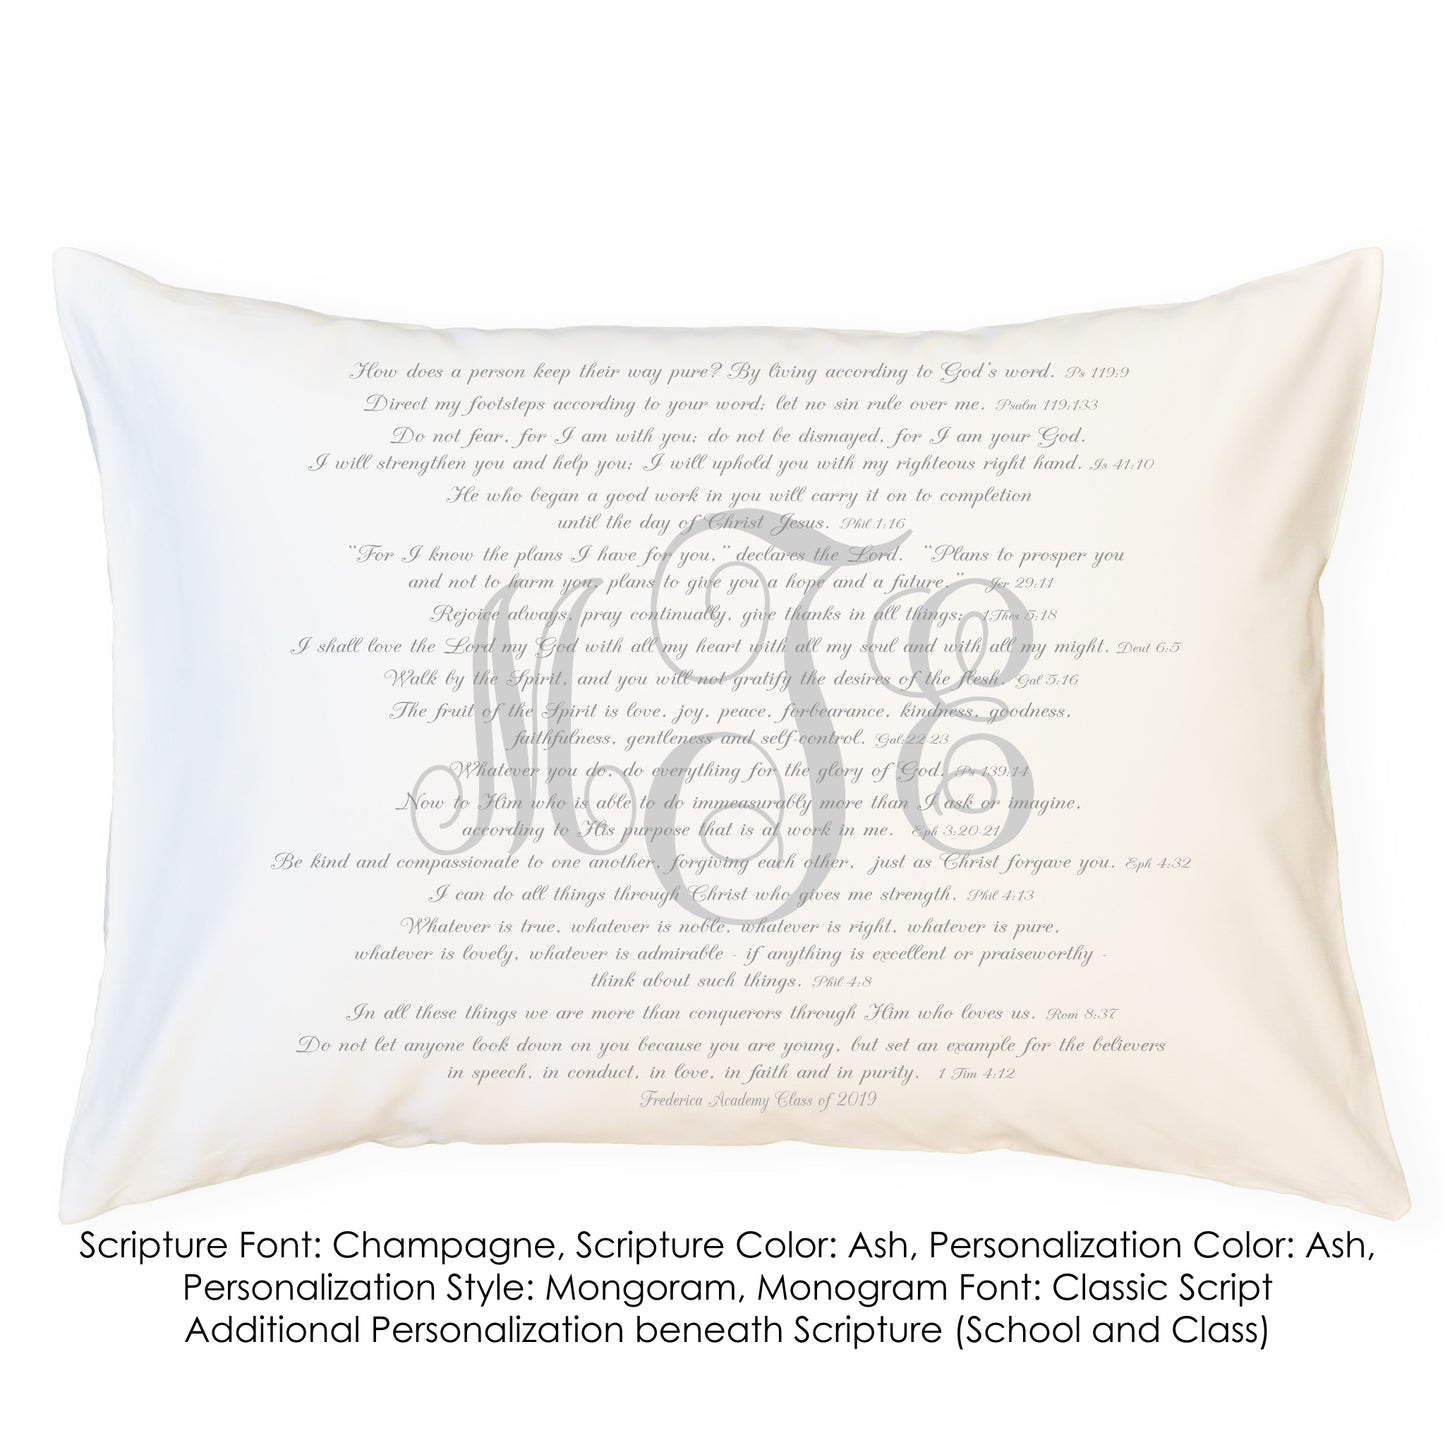 Scripture for Integrity - Standard Pillowcase